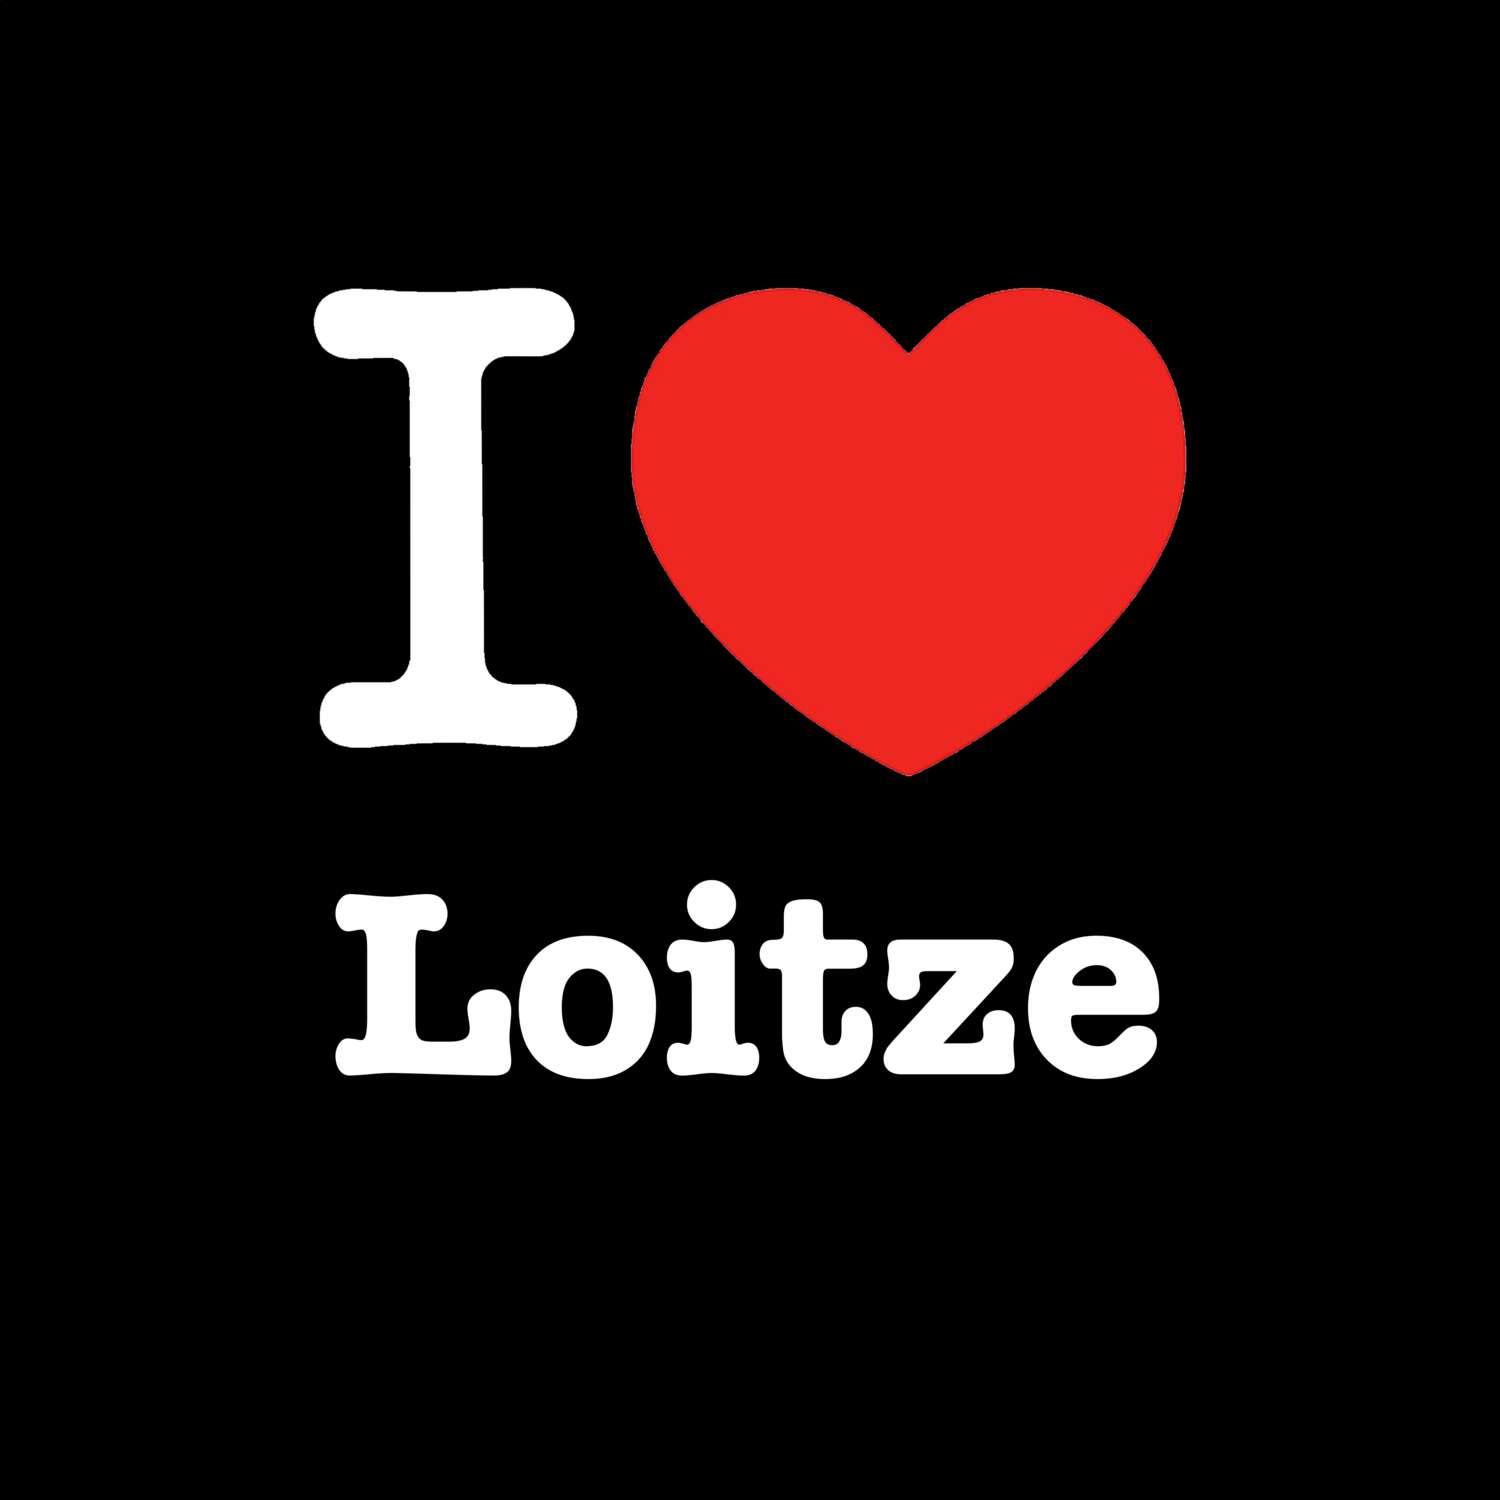 Loitze T-Shirt »I love«